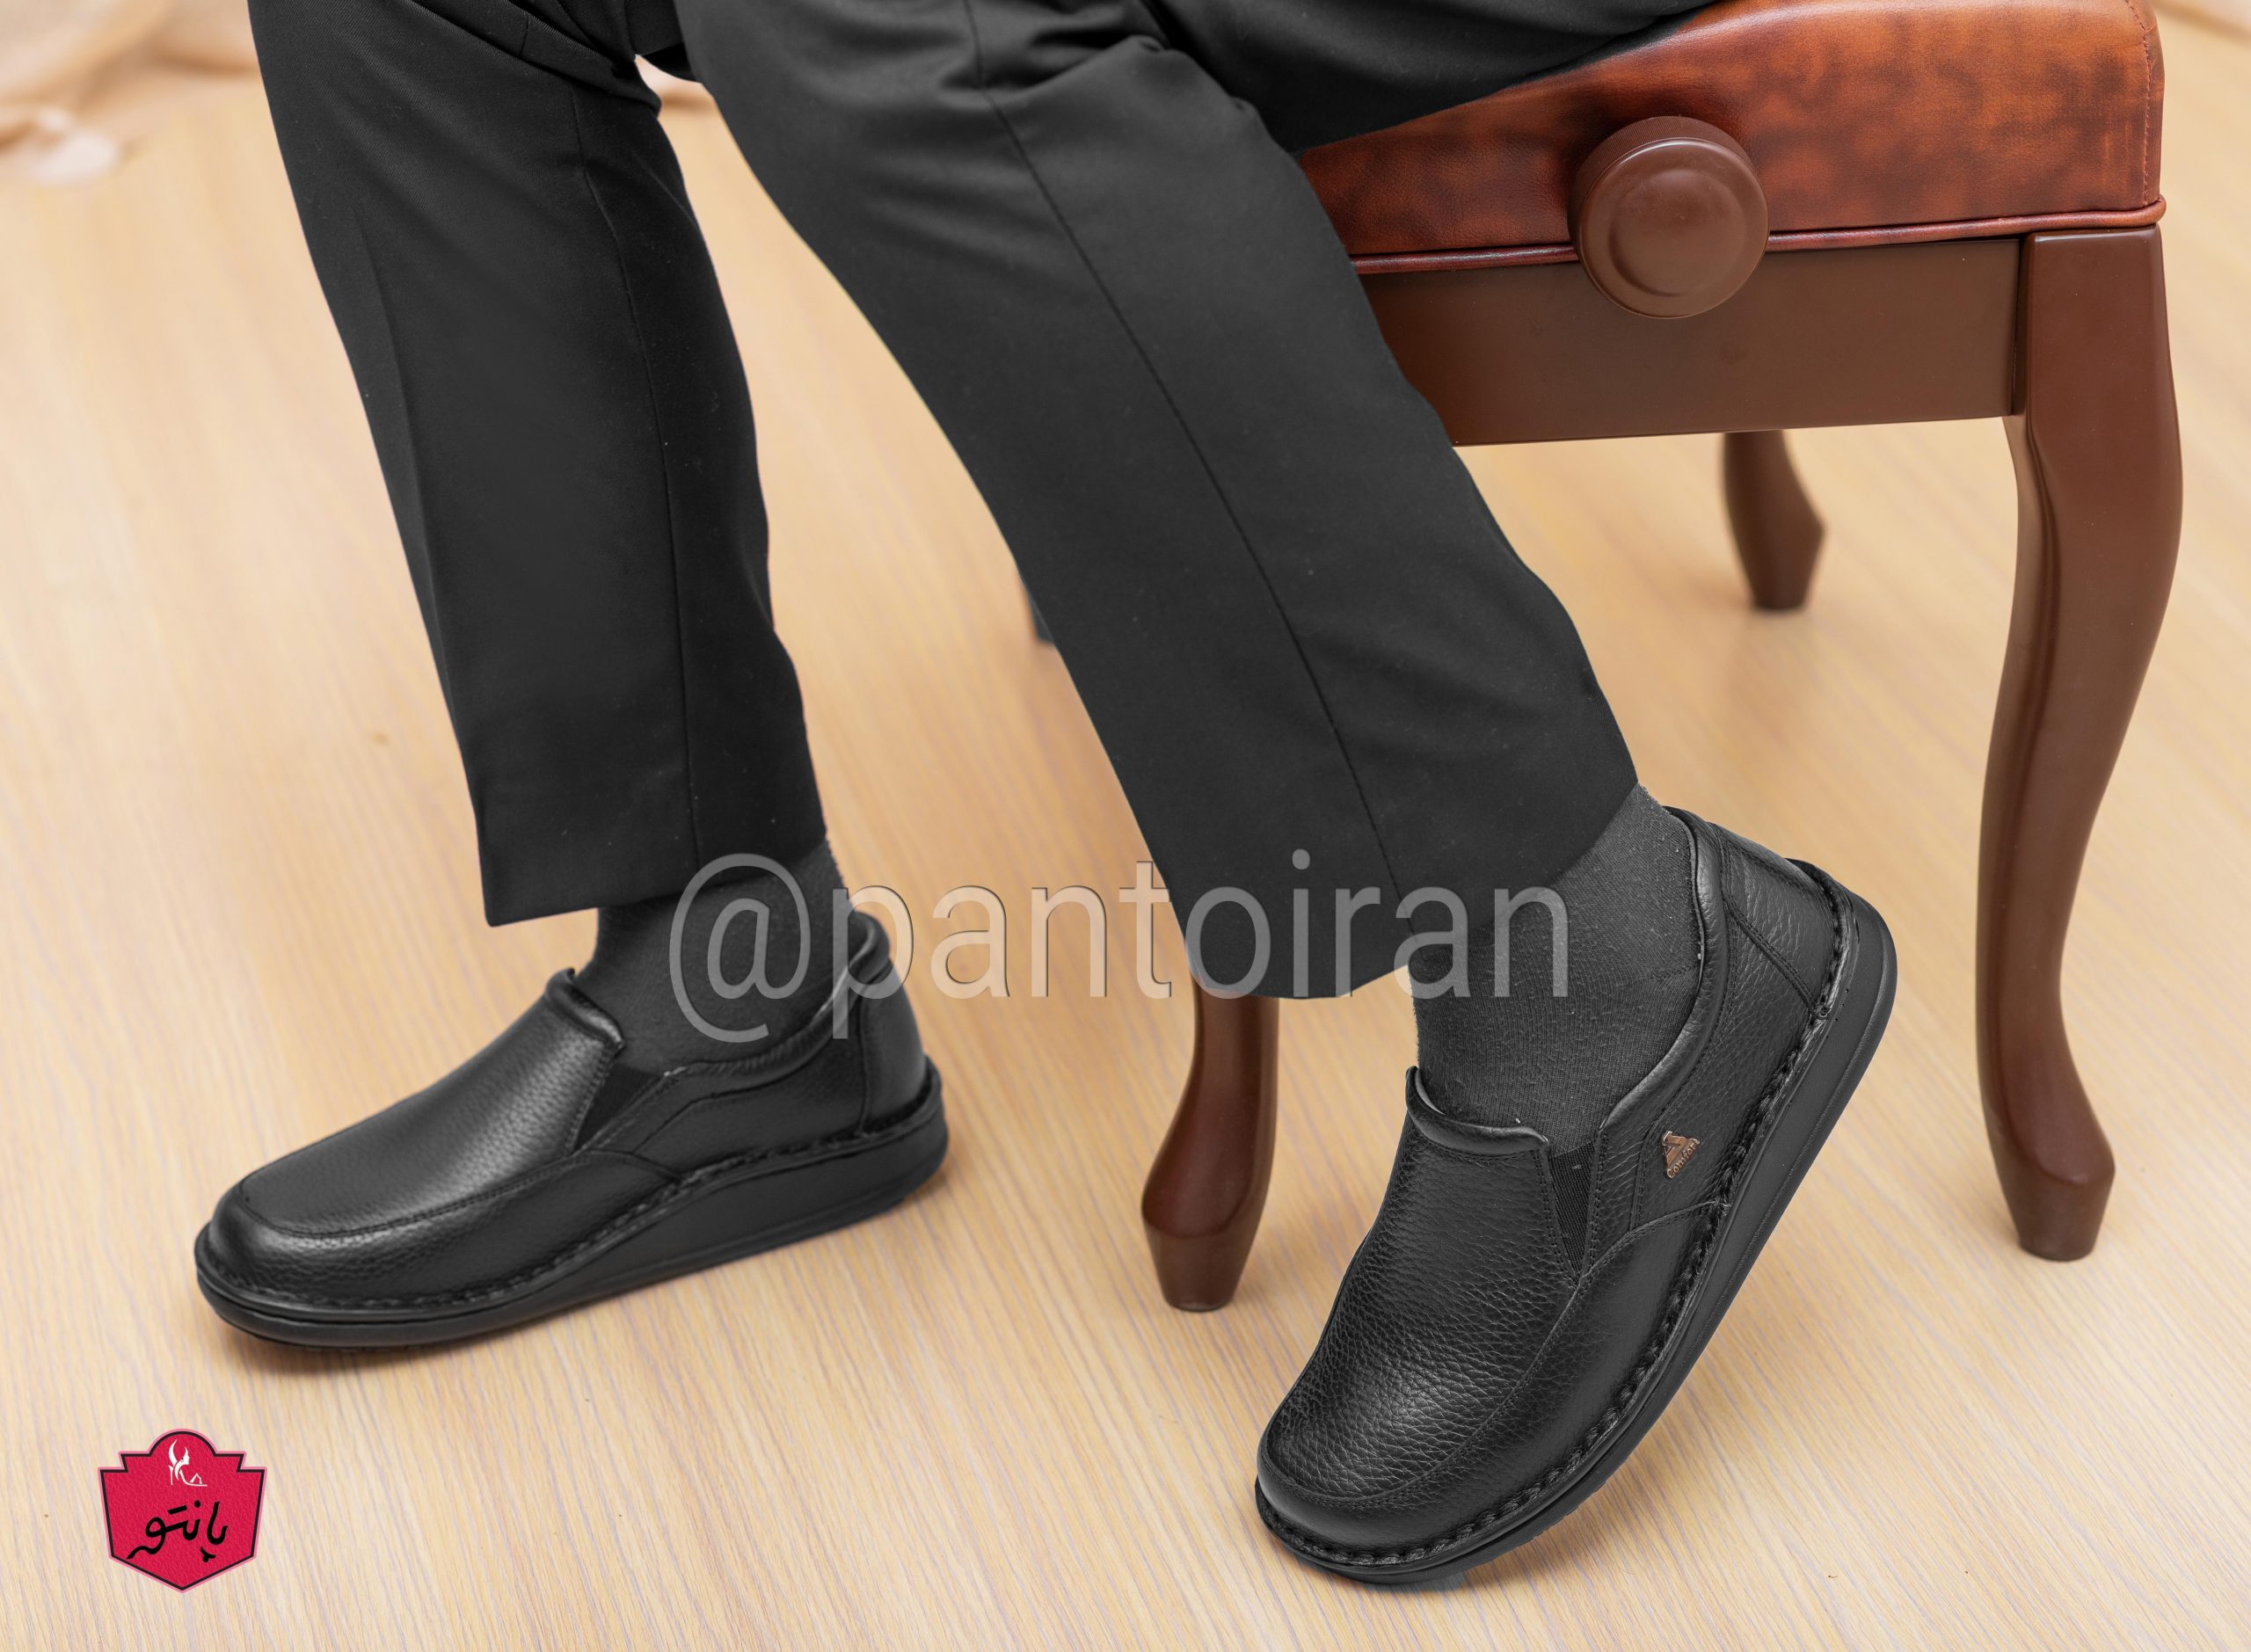 Orthopedic and diabetic shoes : "Arat" | Code 1300401